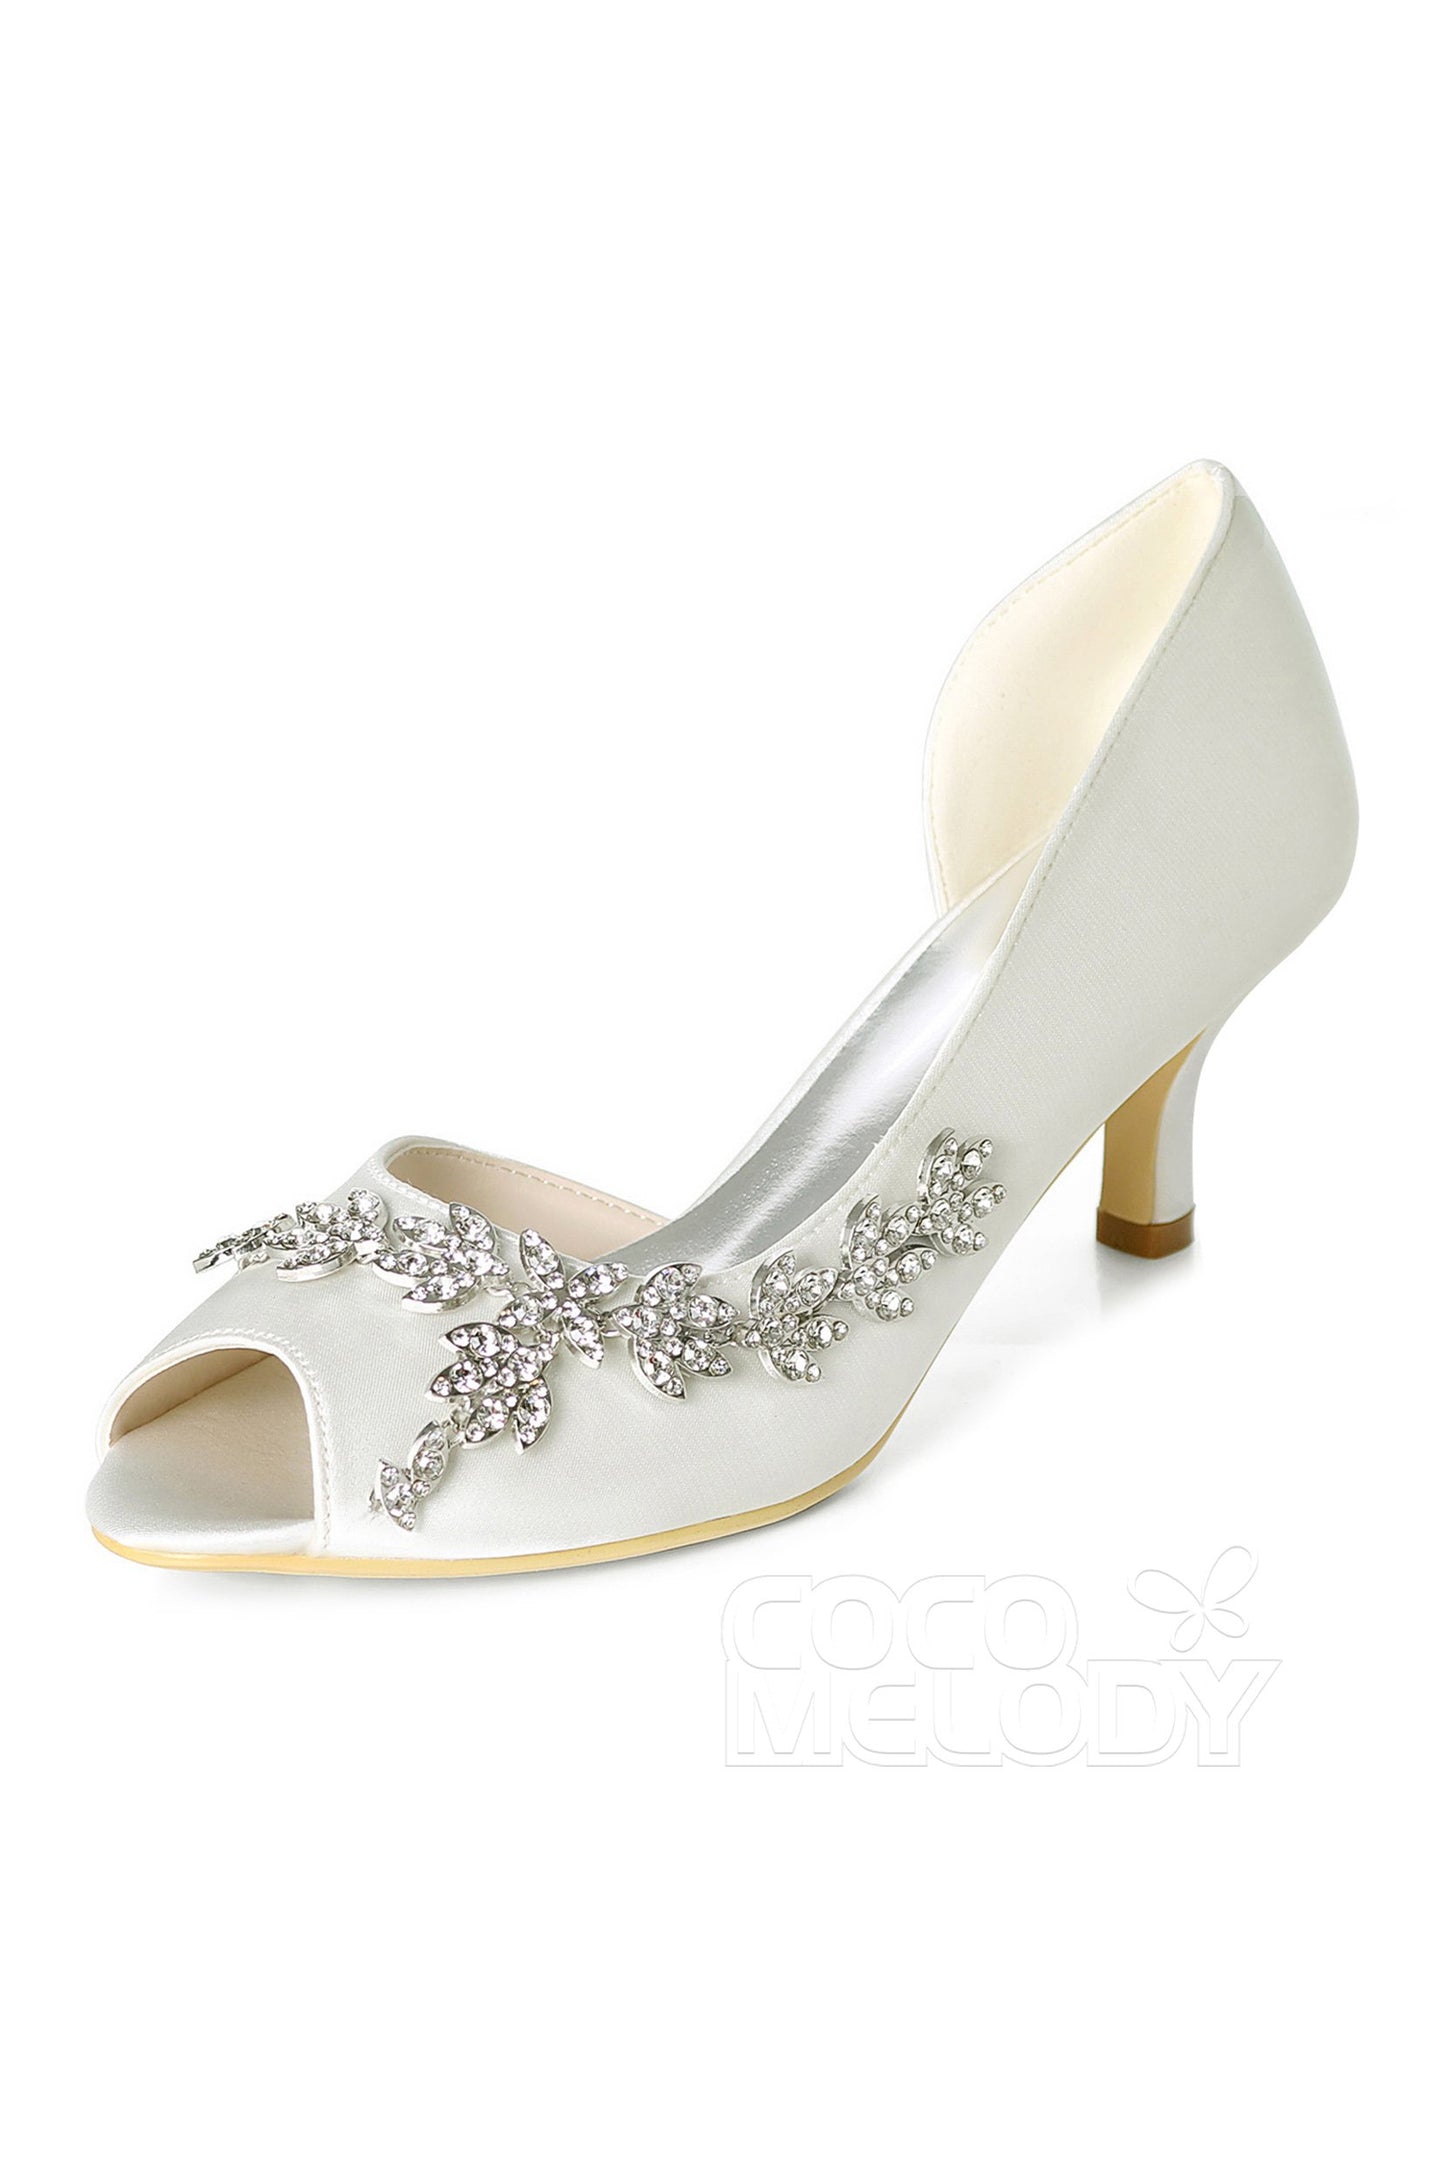 Low Heel Silk-Like Peep Toe Dress Shoes CK0061